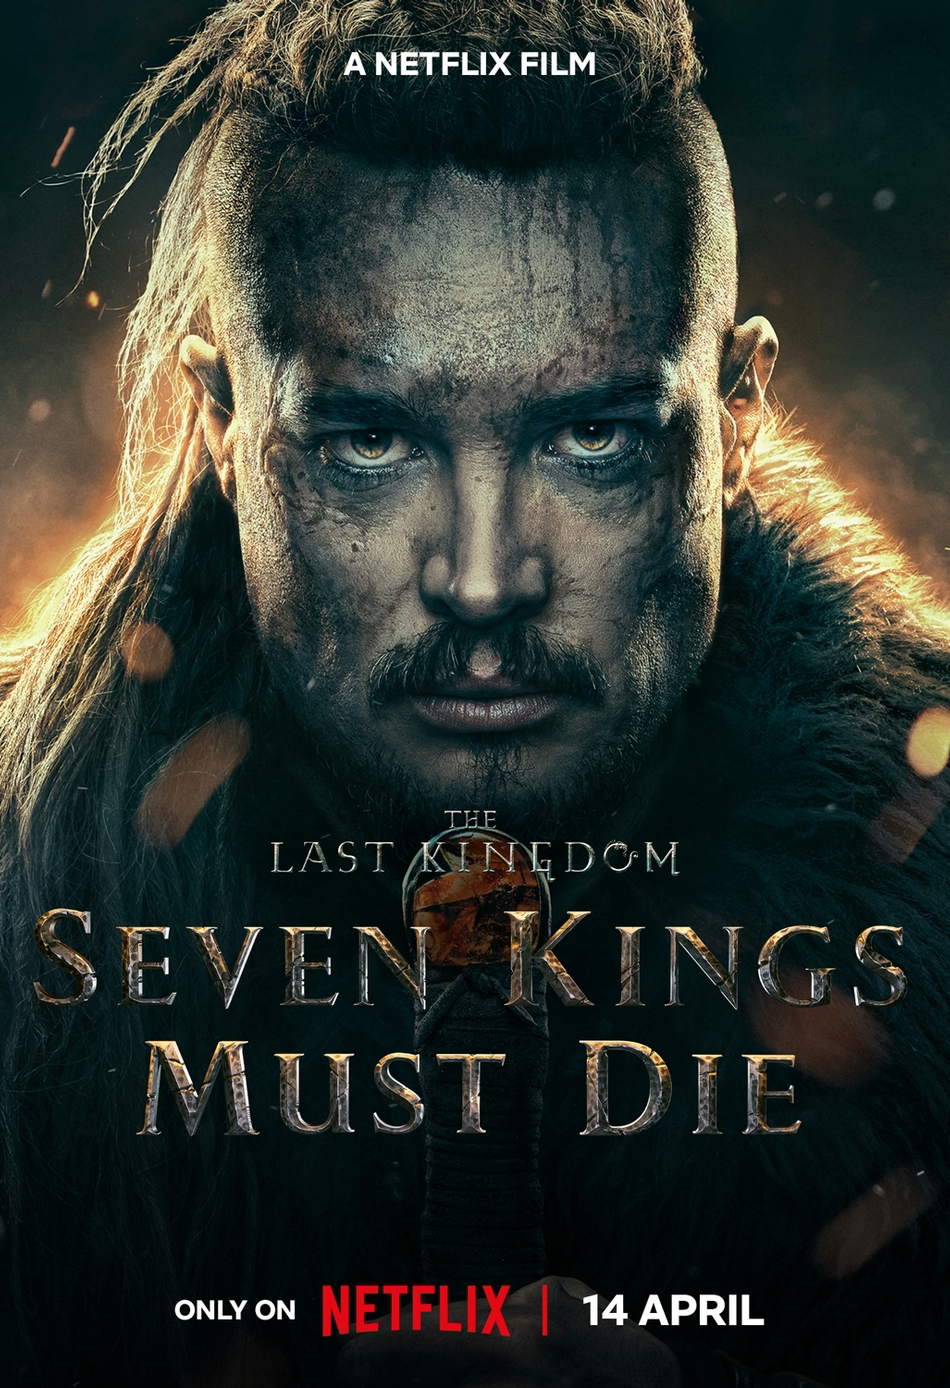 Poster Phim Cái chết của bảy vị vua (The Last Kingdom: Seven Kings Must Die)